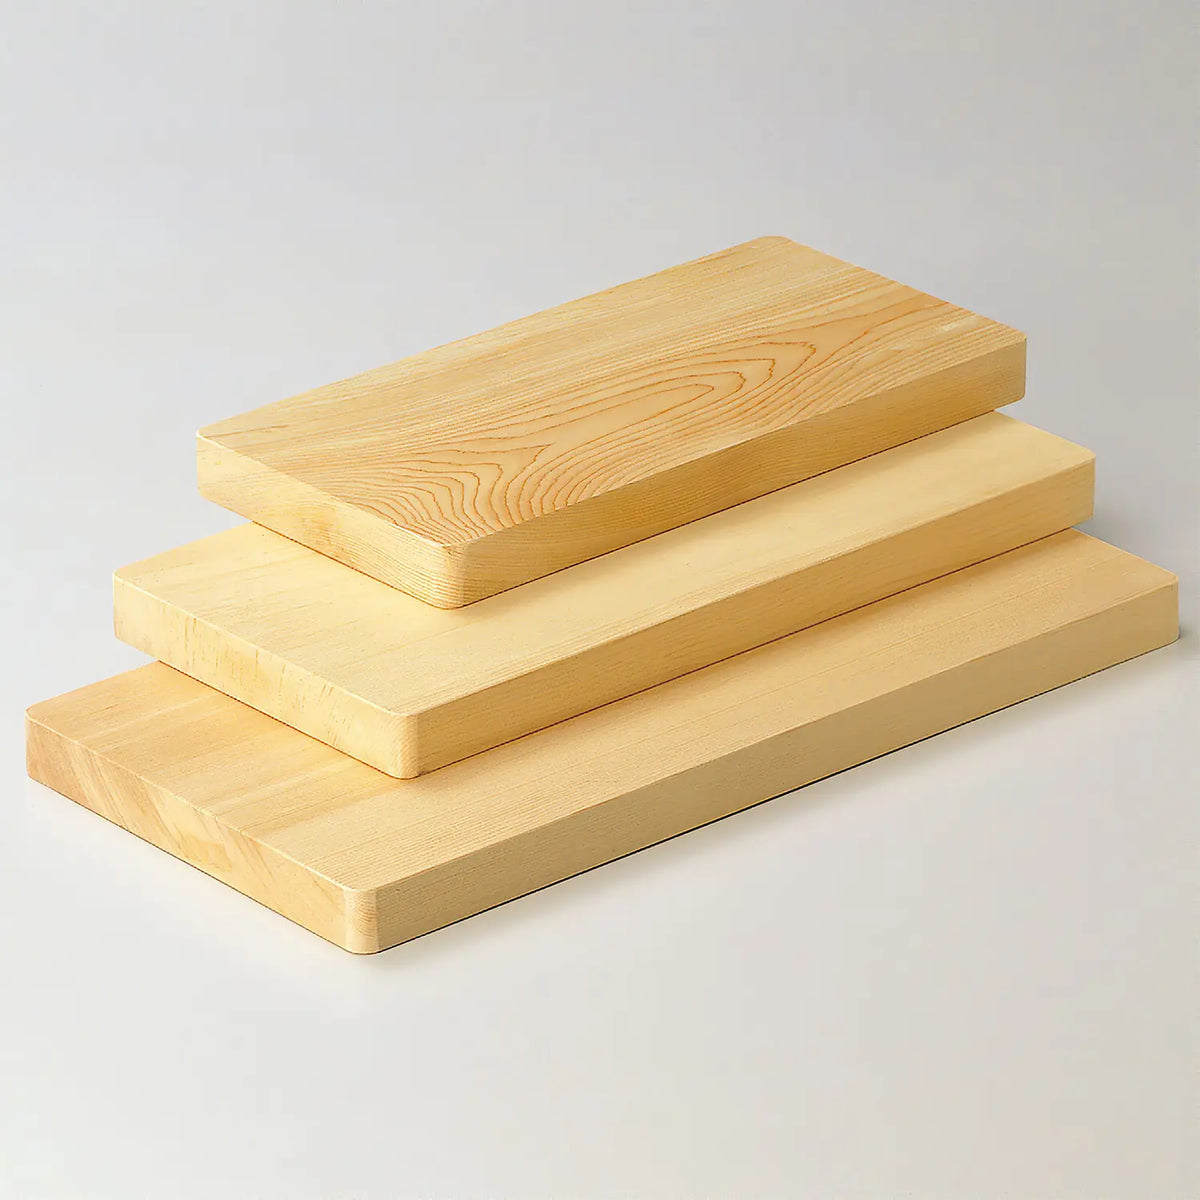 Yamacoh Single Piece Kiso Hinoki Cypress Wooden Cutting Board